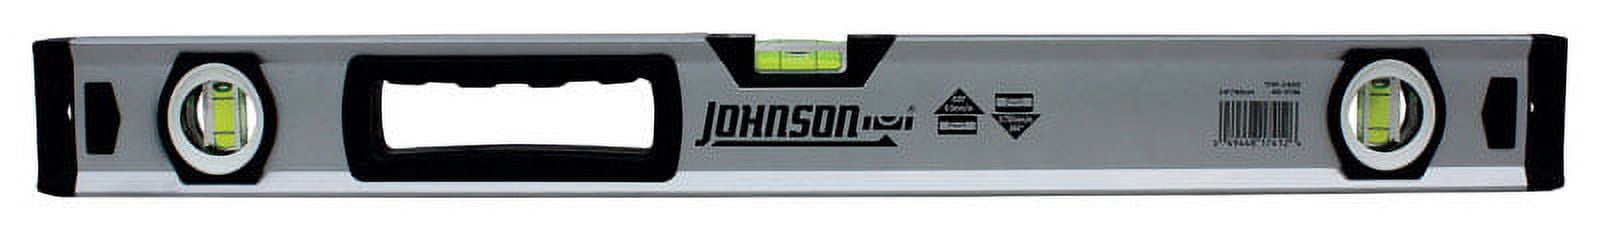 Johnson Level Aluminum 24-in 3 Vial Magnetic Box Beam Level at